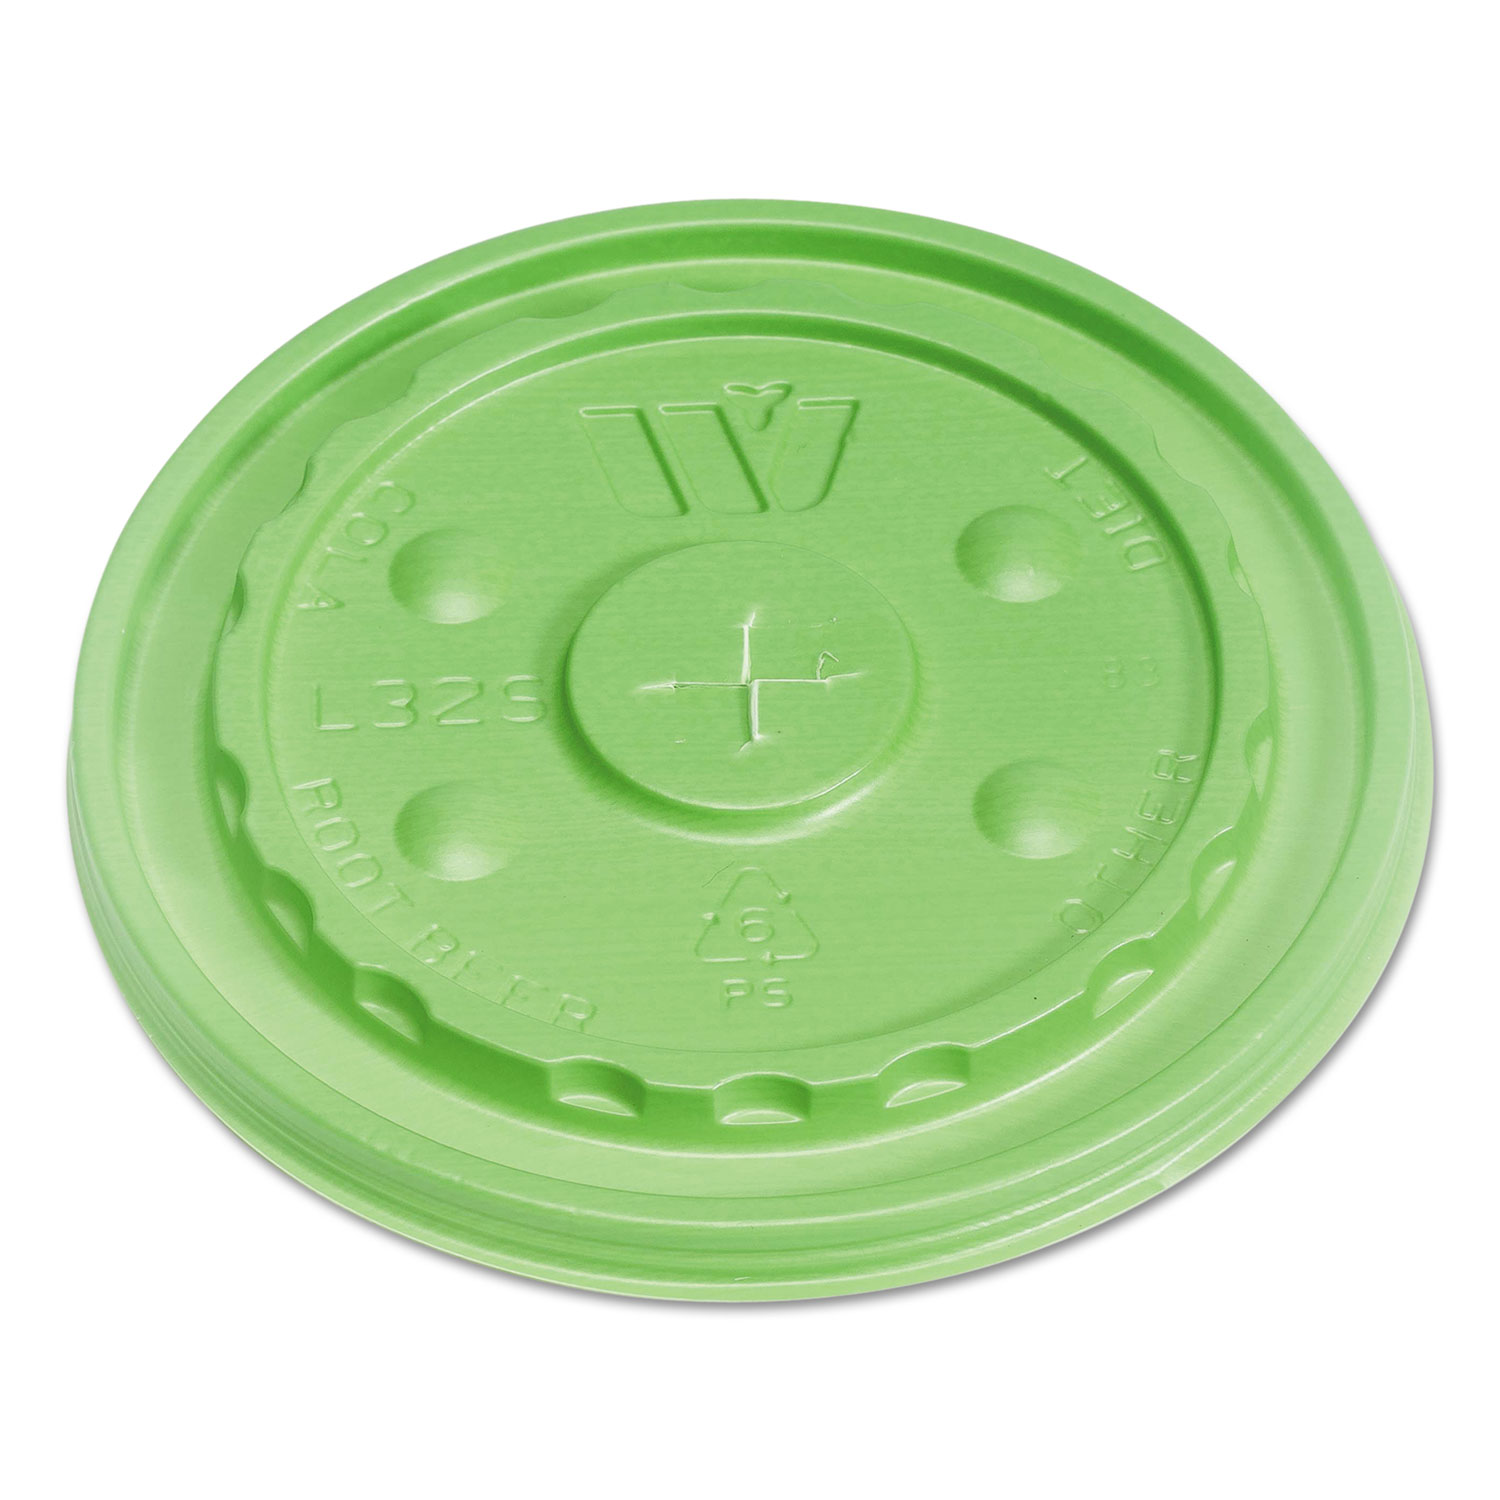 Vio Biodegradable Lids f/32 oz Cups, Straw-Slot, Green, 500/Carton